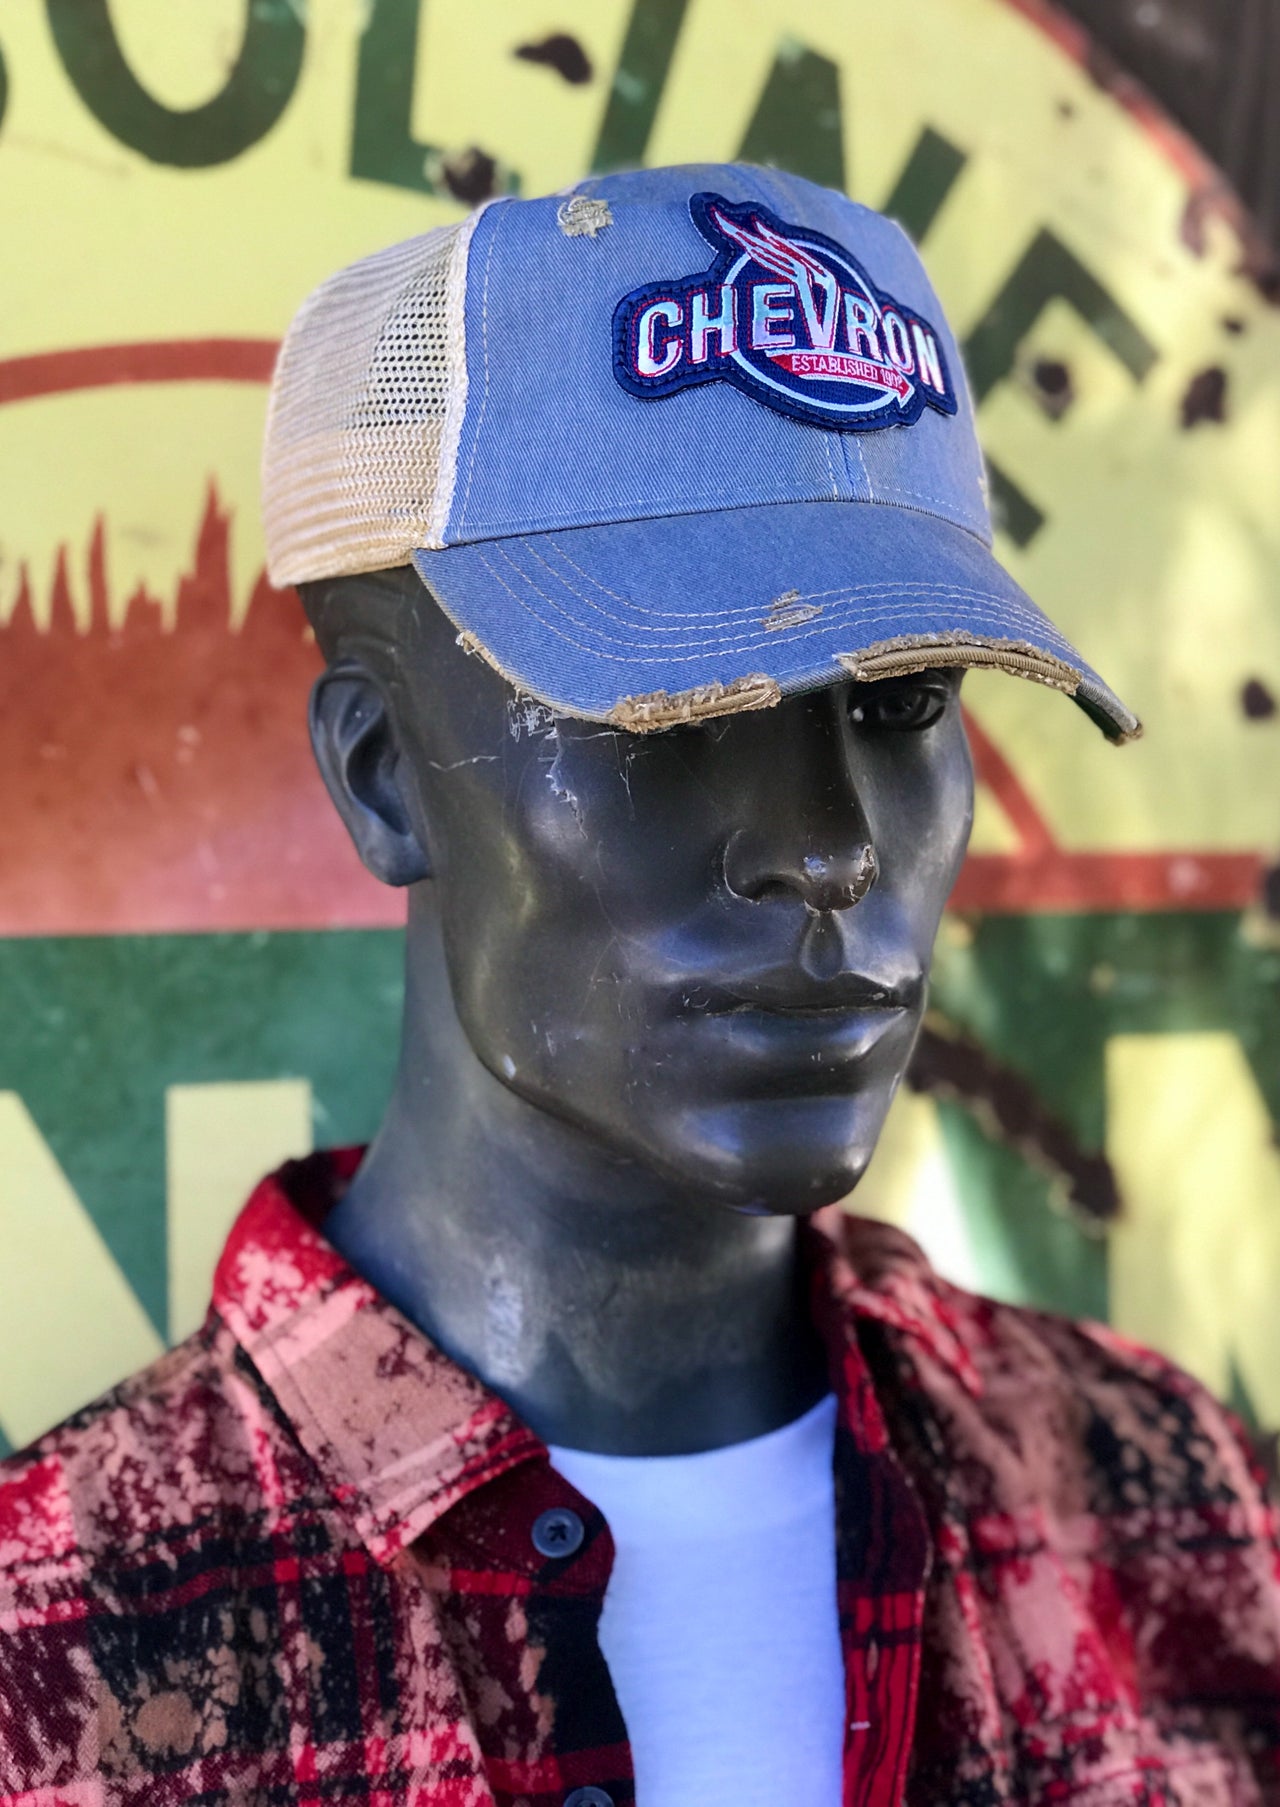 Chevron Gasoline Blue Hat Angry Minnow Vintage Hat